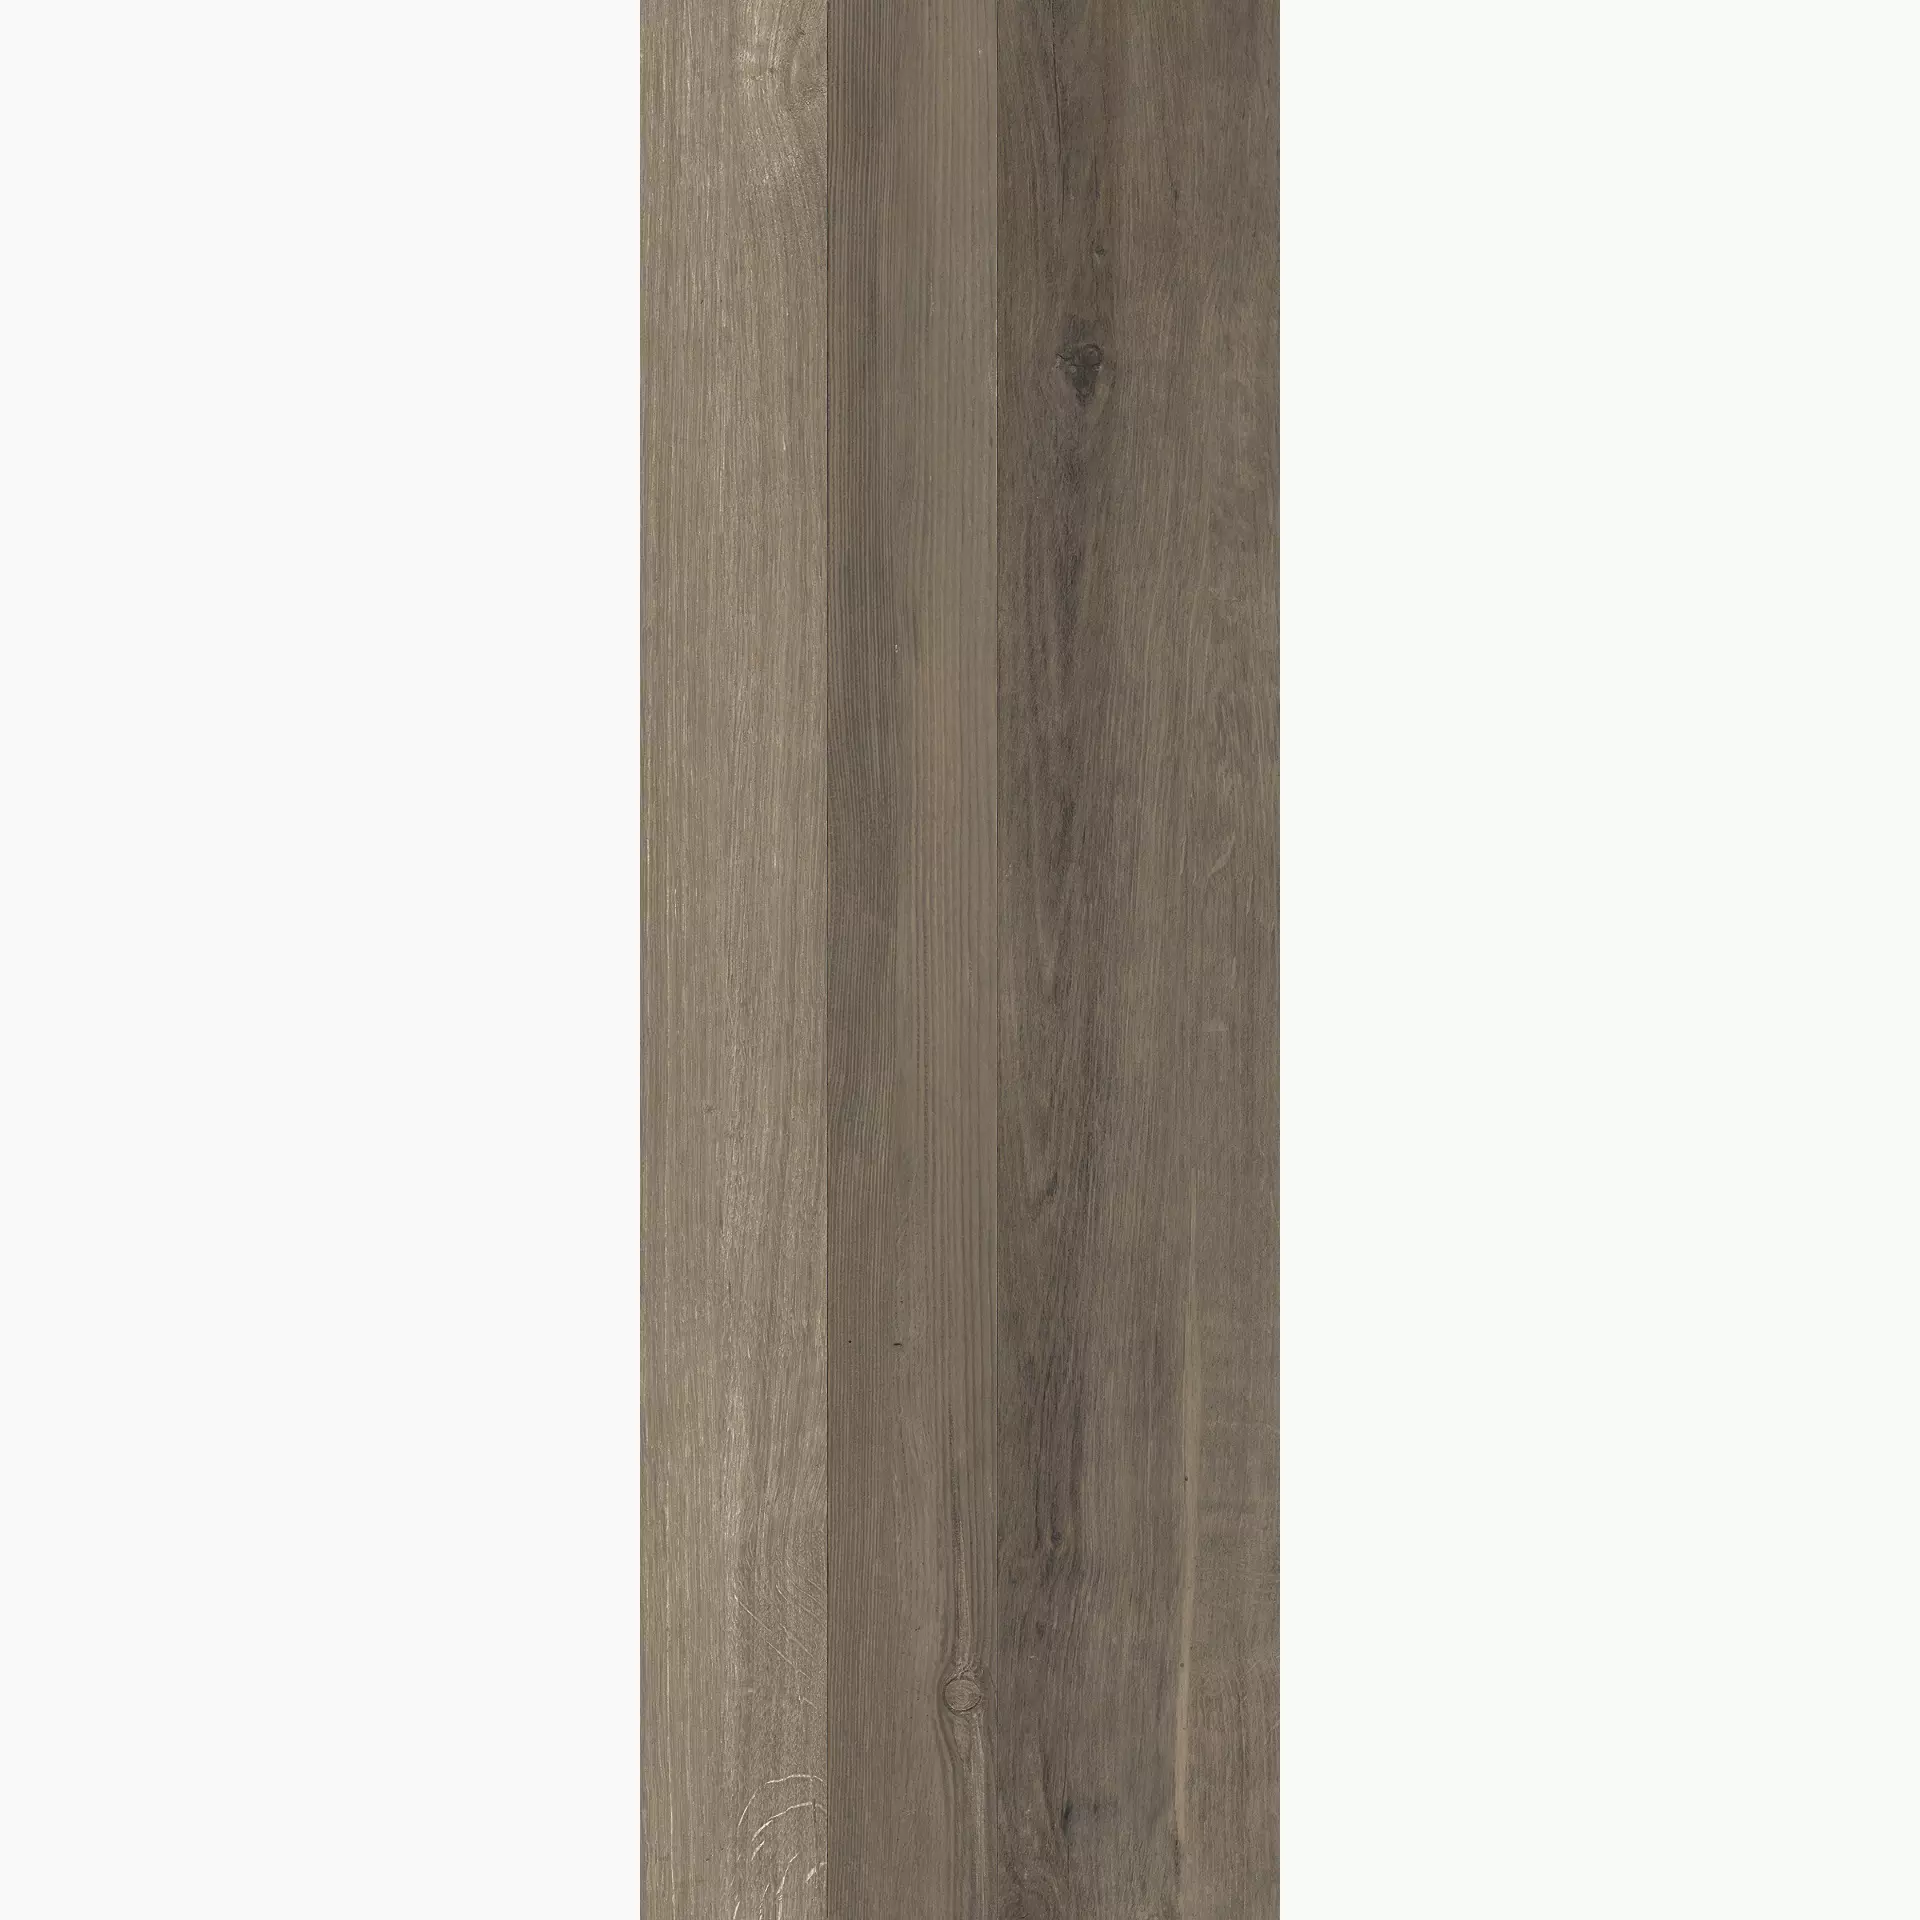 KRONOS Woodside Nut Grip Decor Doga 2.0 6653 40x120cm rectified 20mm